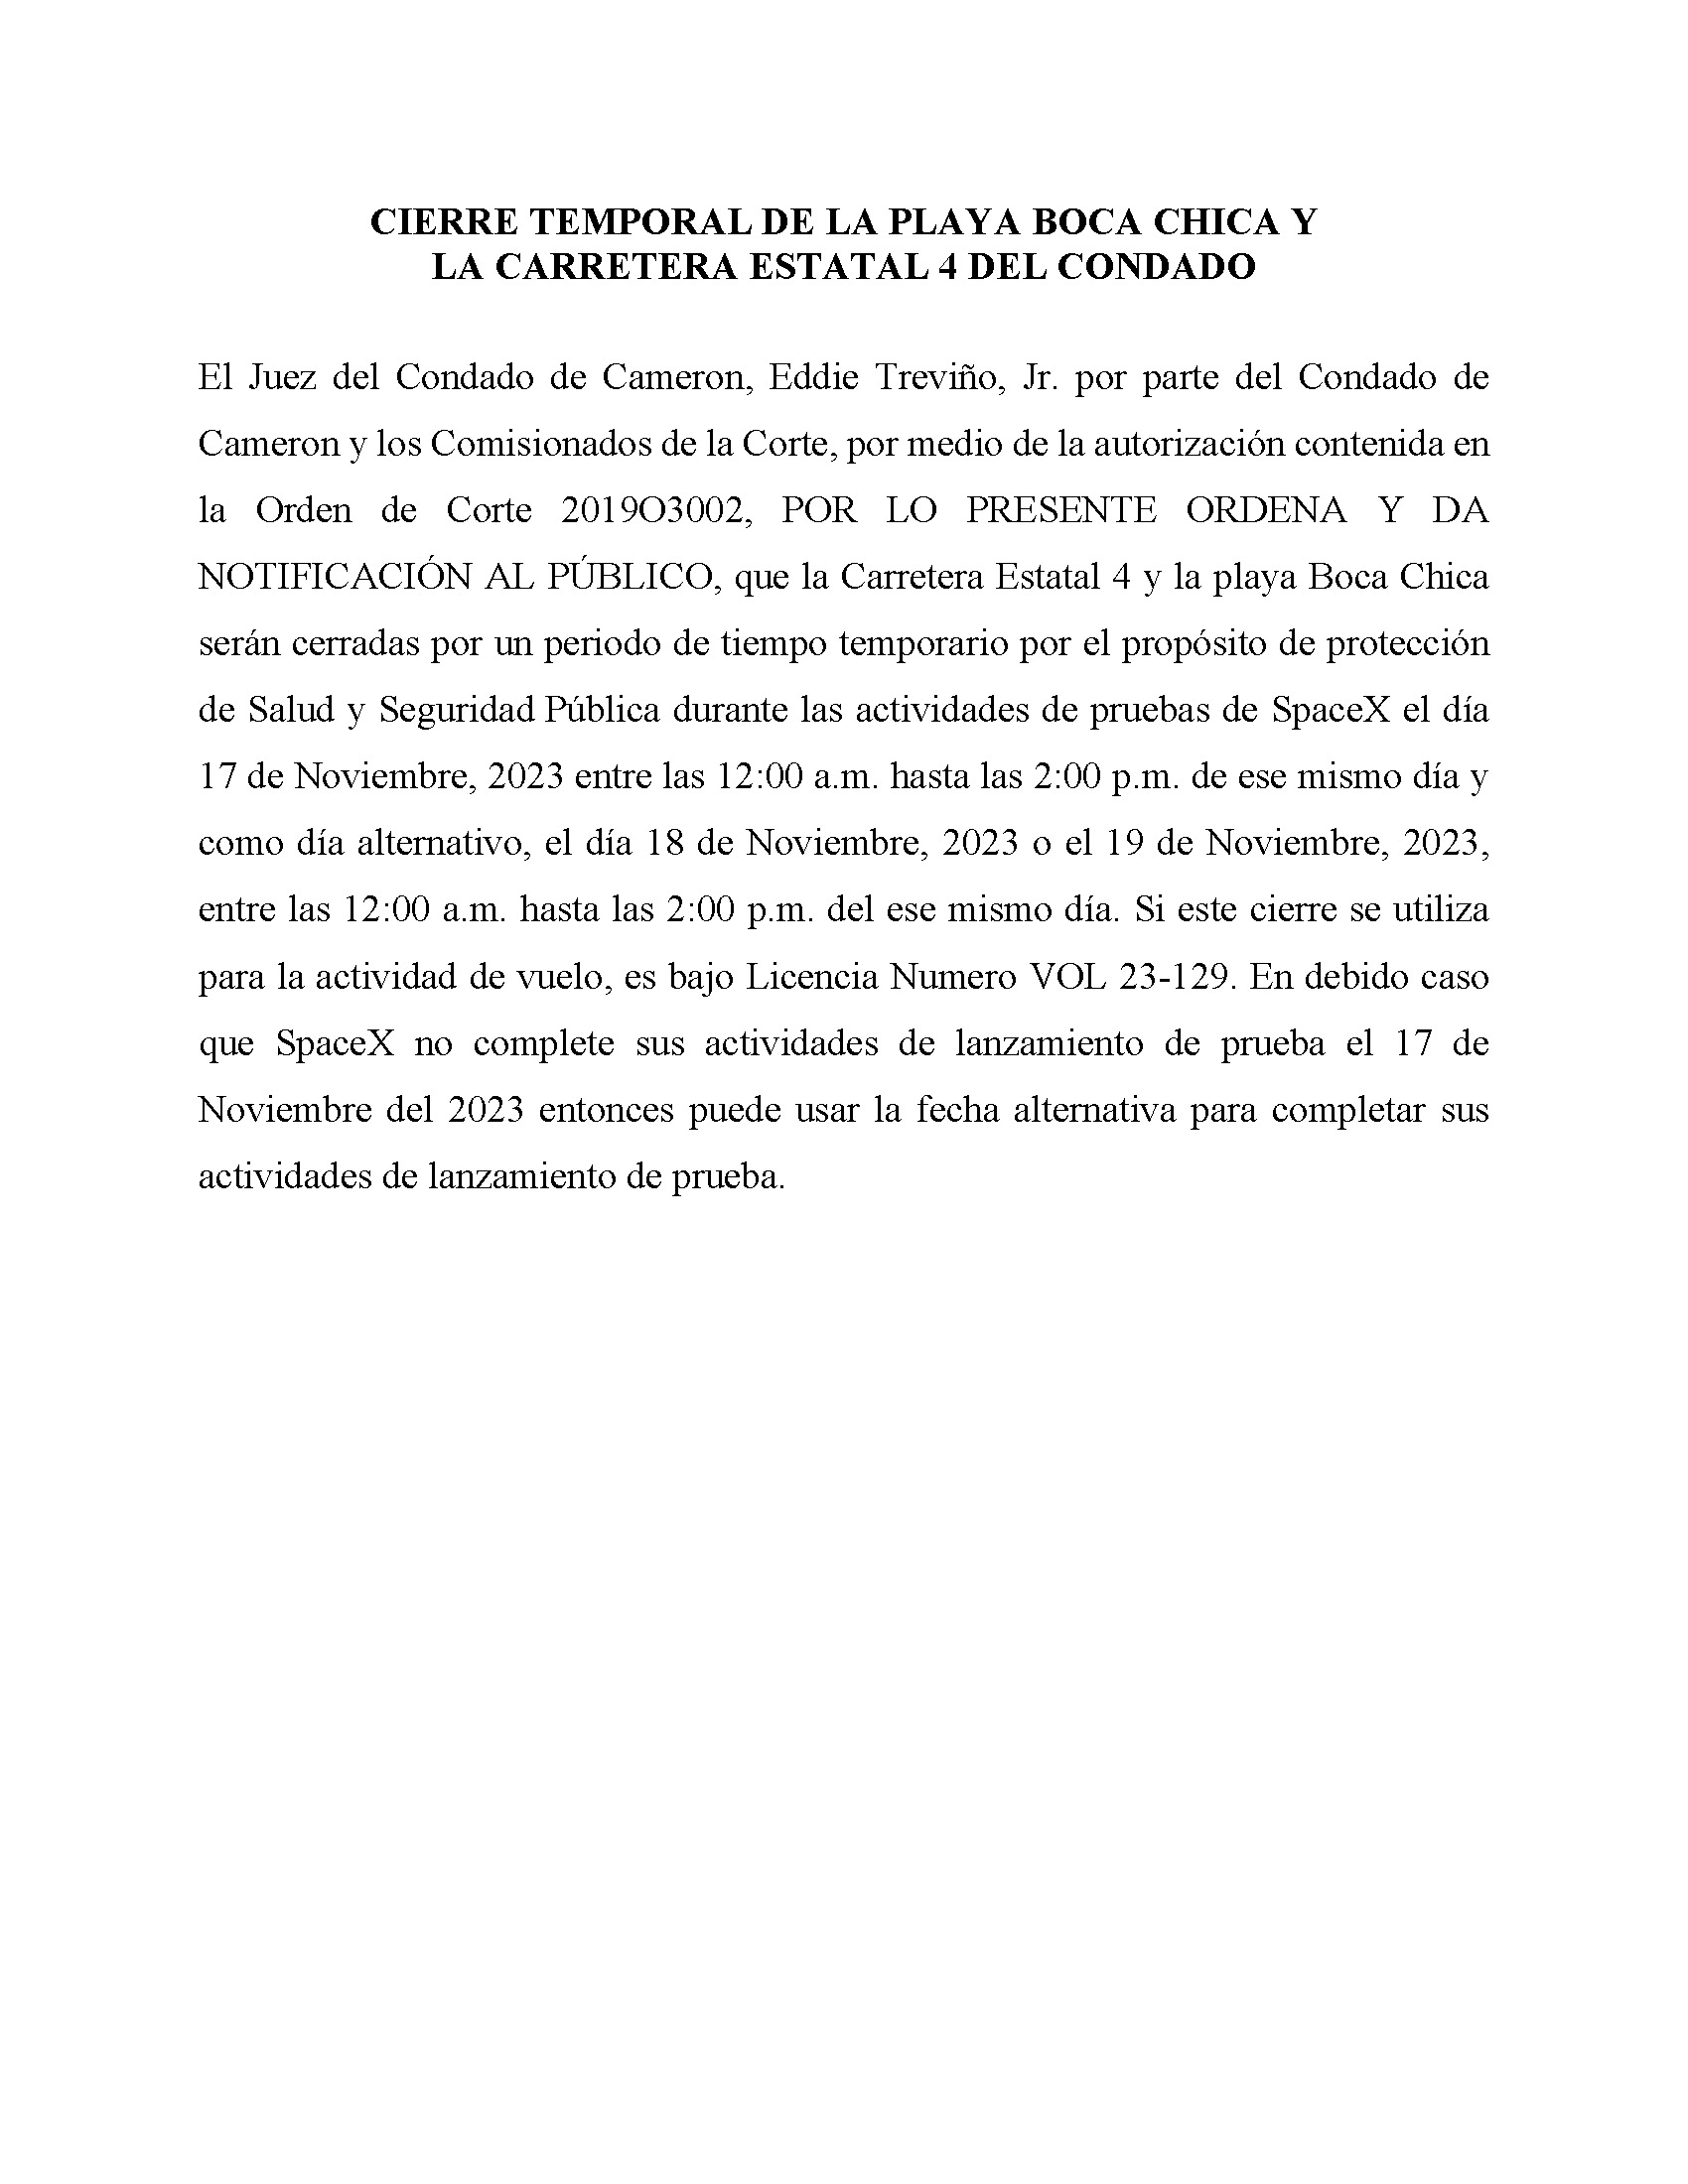 ORDER.CLOSURE OF HIGHWAY 4 Y LA PLAYA BOCA CHICA.SPANISH.11.17.2023